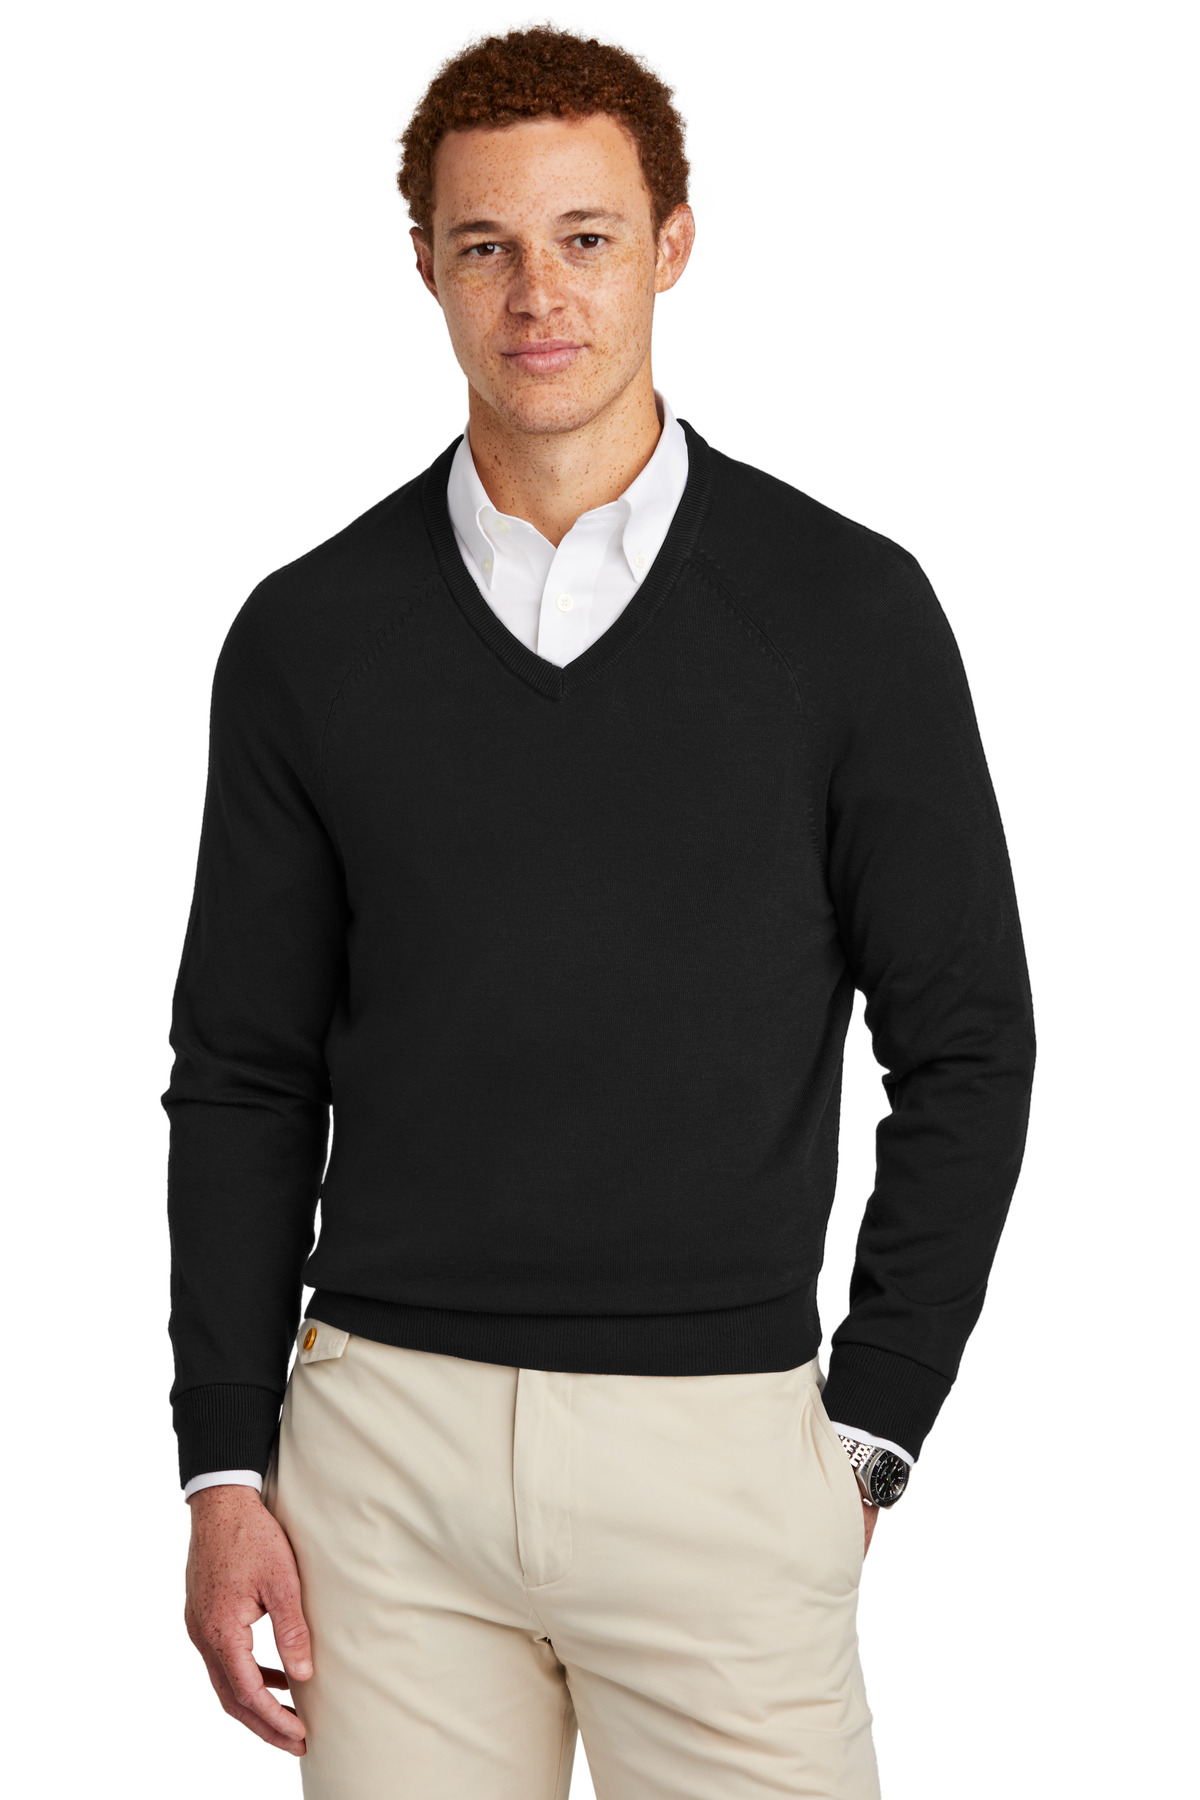 Buy Brooks Brothers Cotton Stretch V-Neck Sweater - Brooks Brothers ...